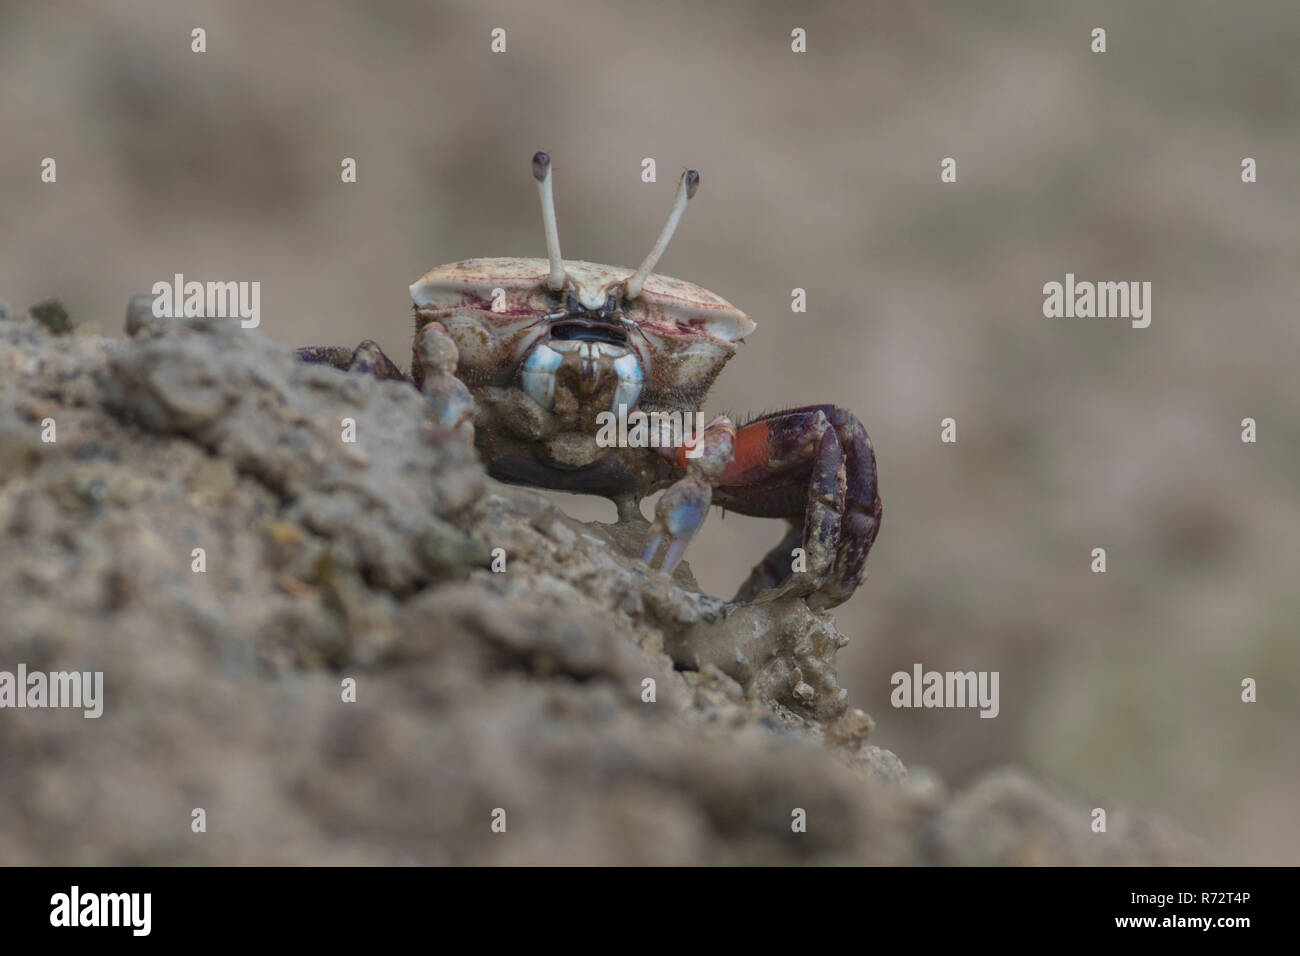 Fiddler Crab, Seychellen Inseln (Uca chlorophthalmus) Stockfoto